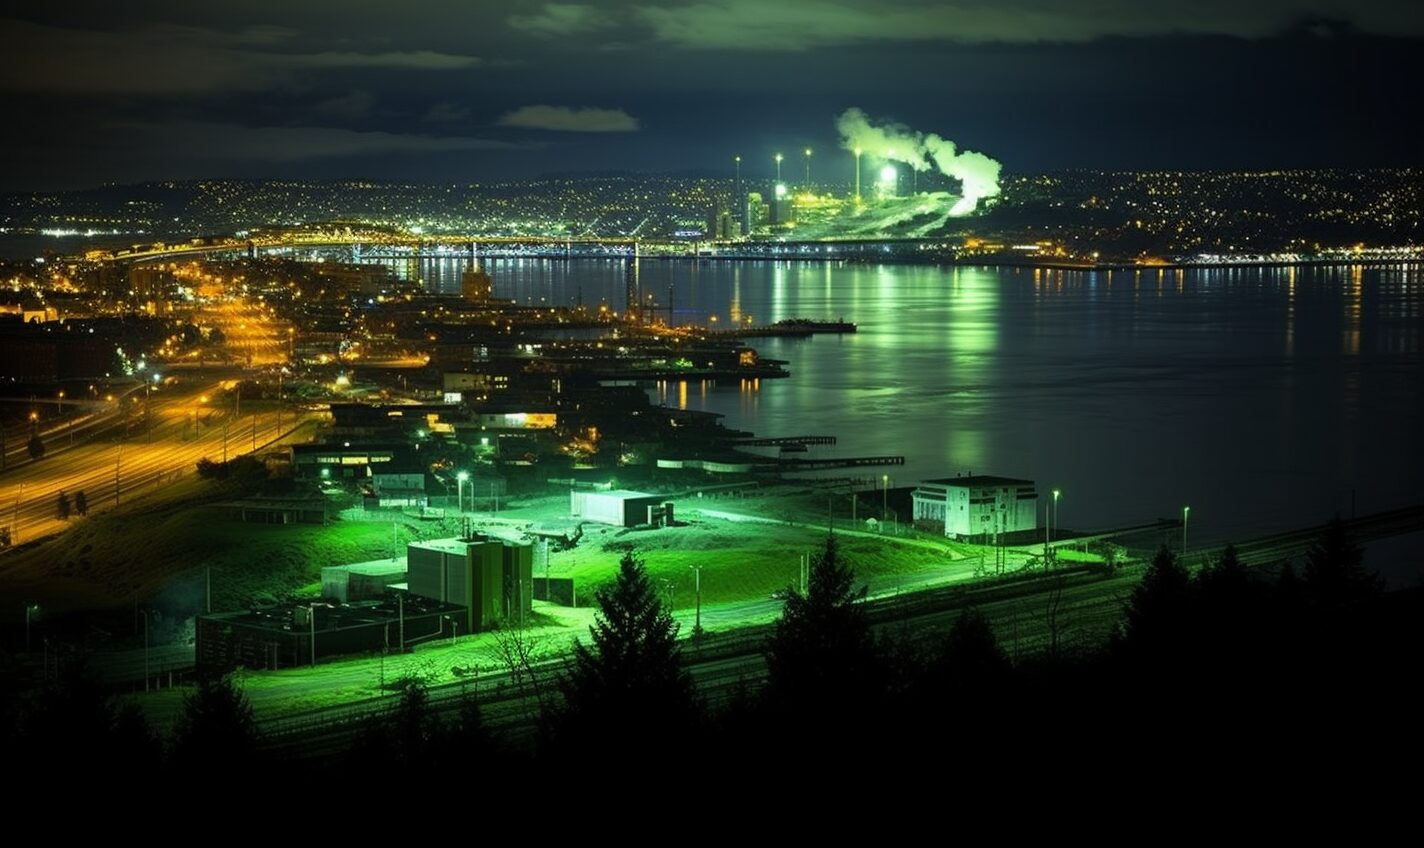 tacoma, washington in a black and neon green glow